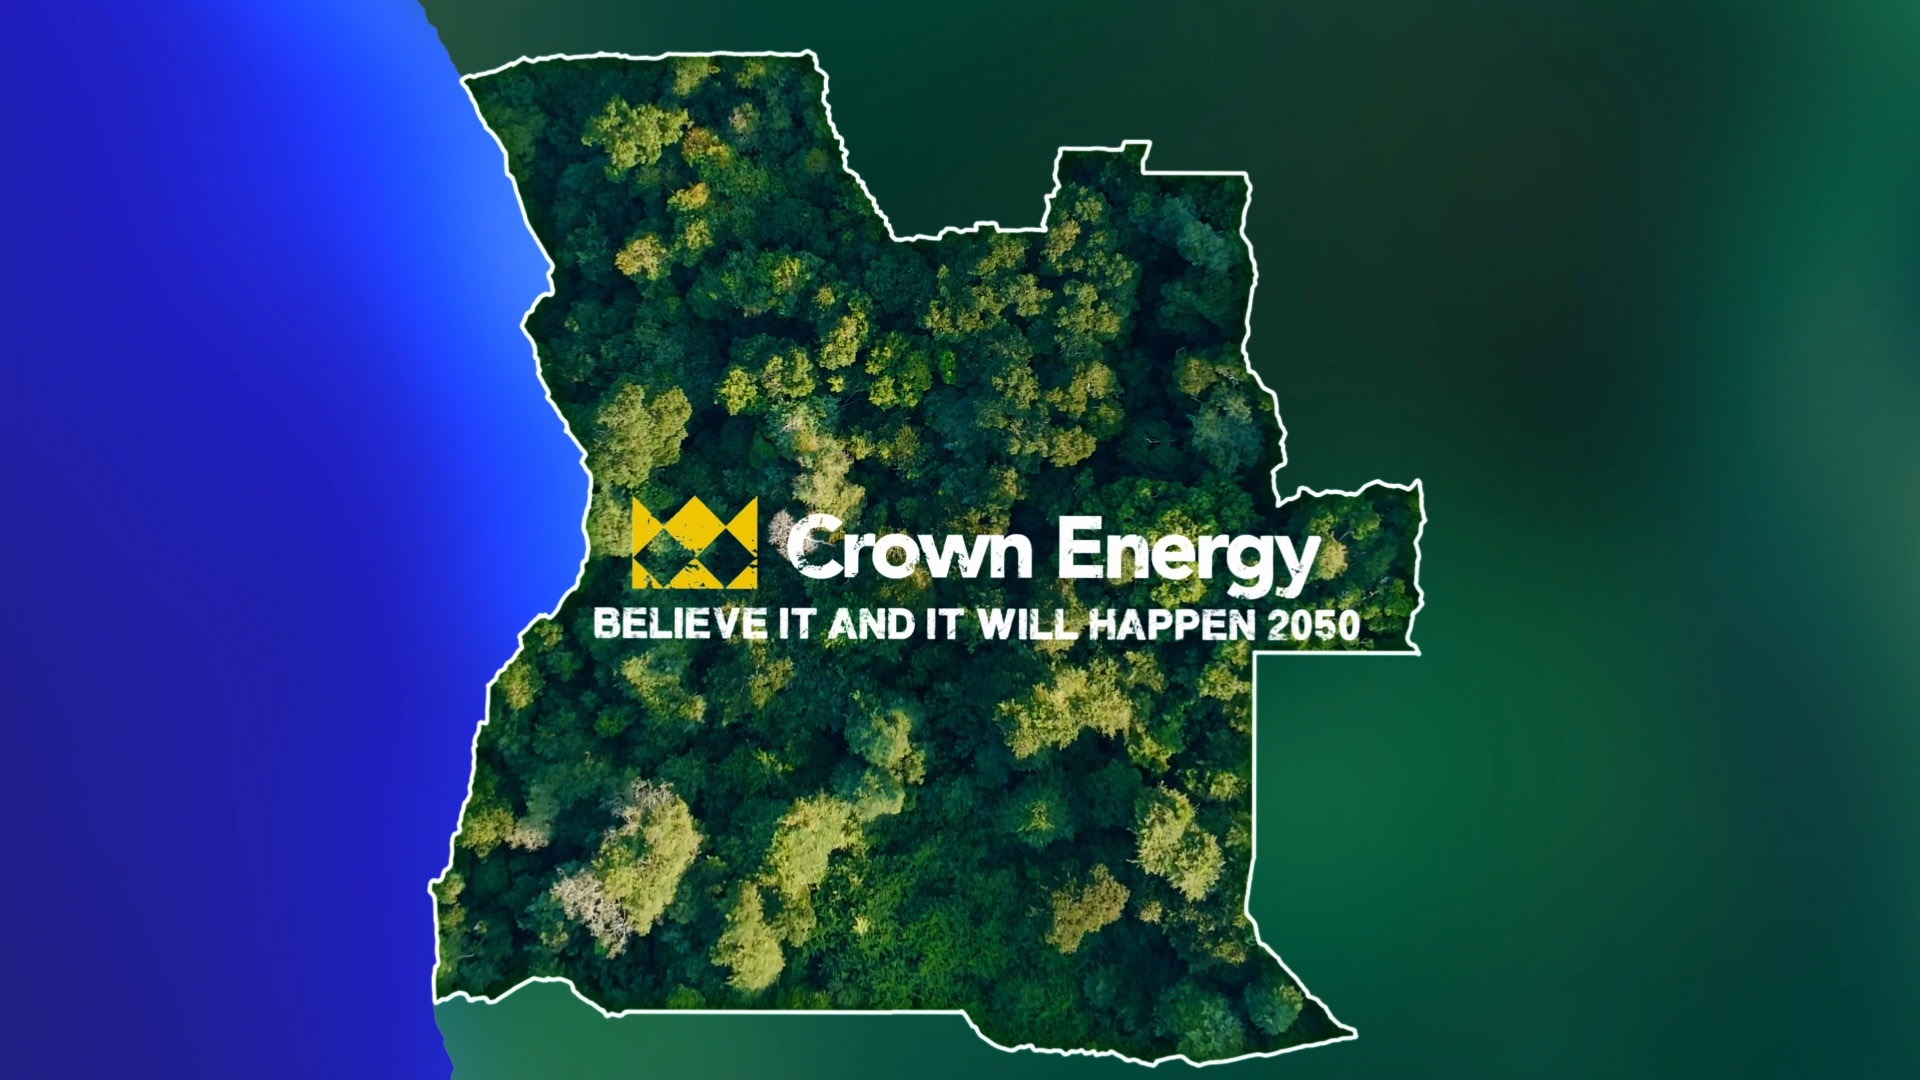 Spot Crown Energy